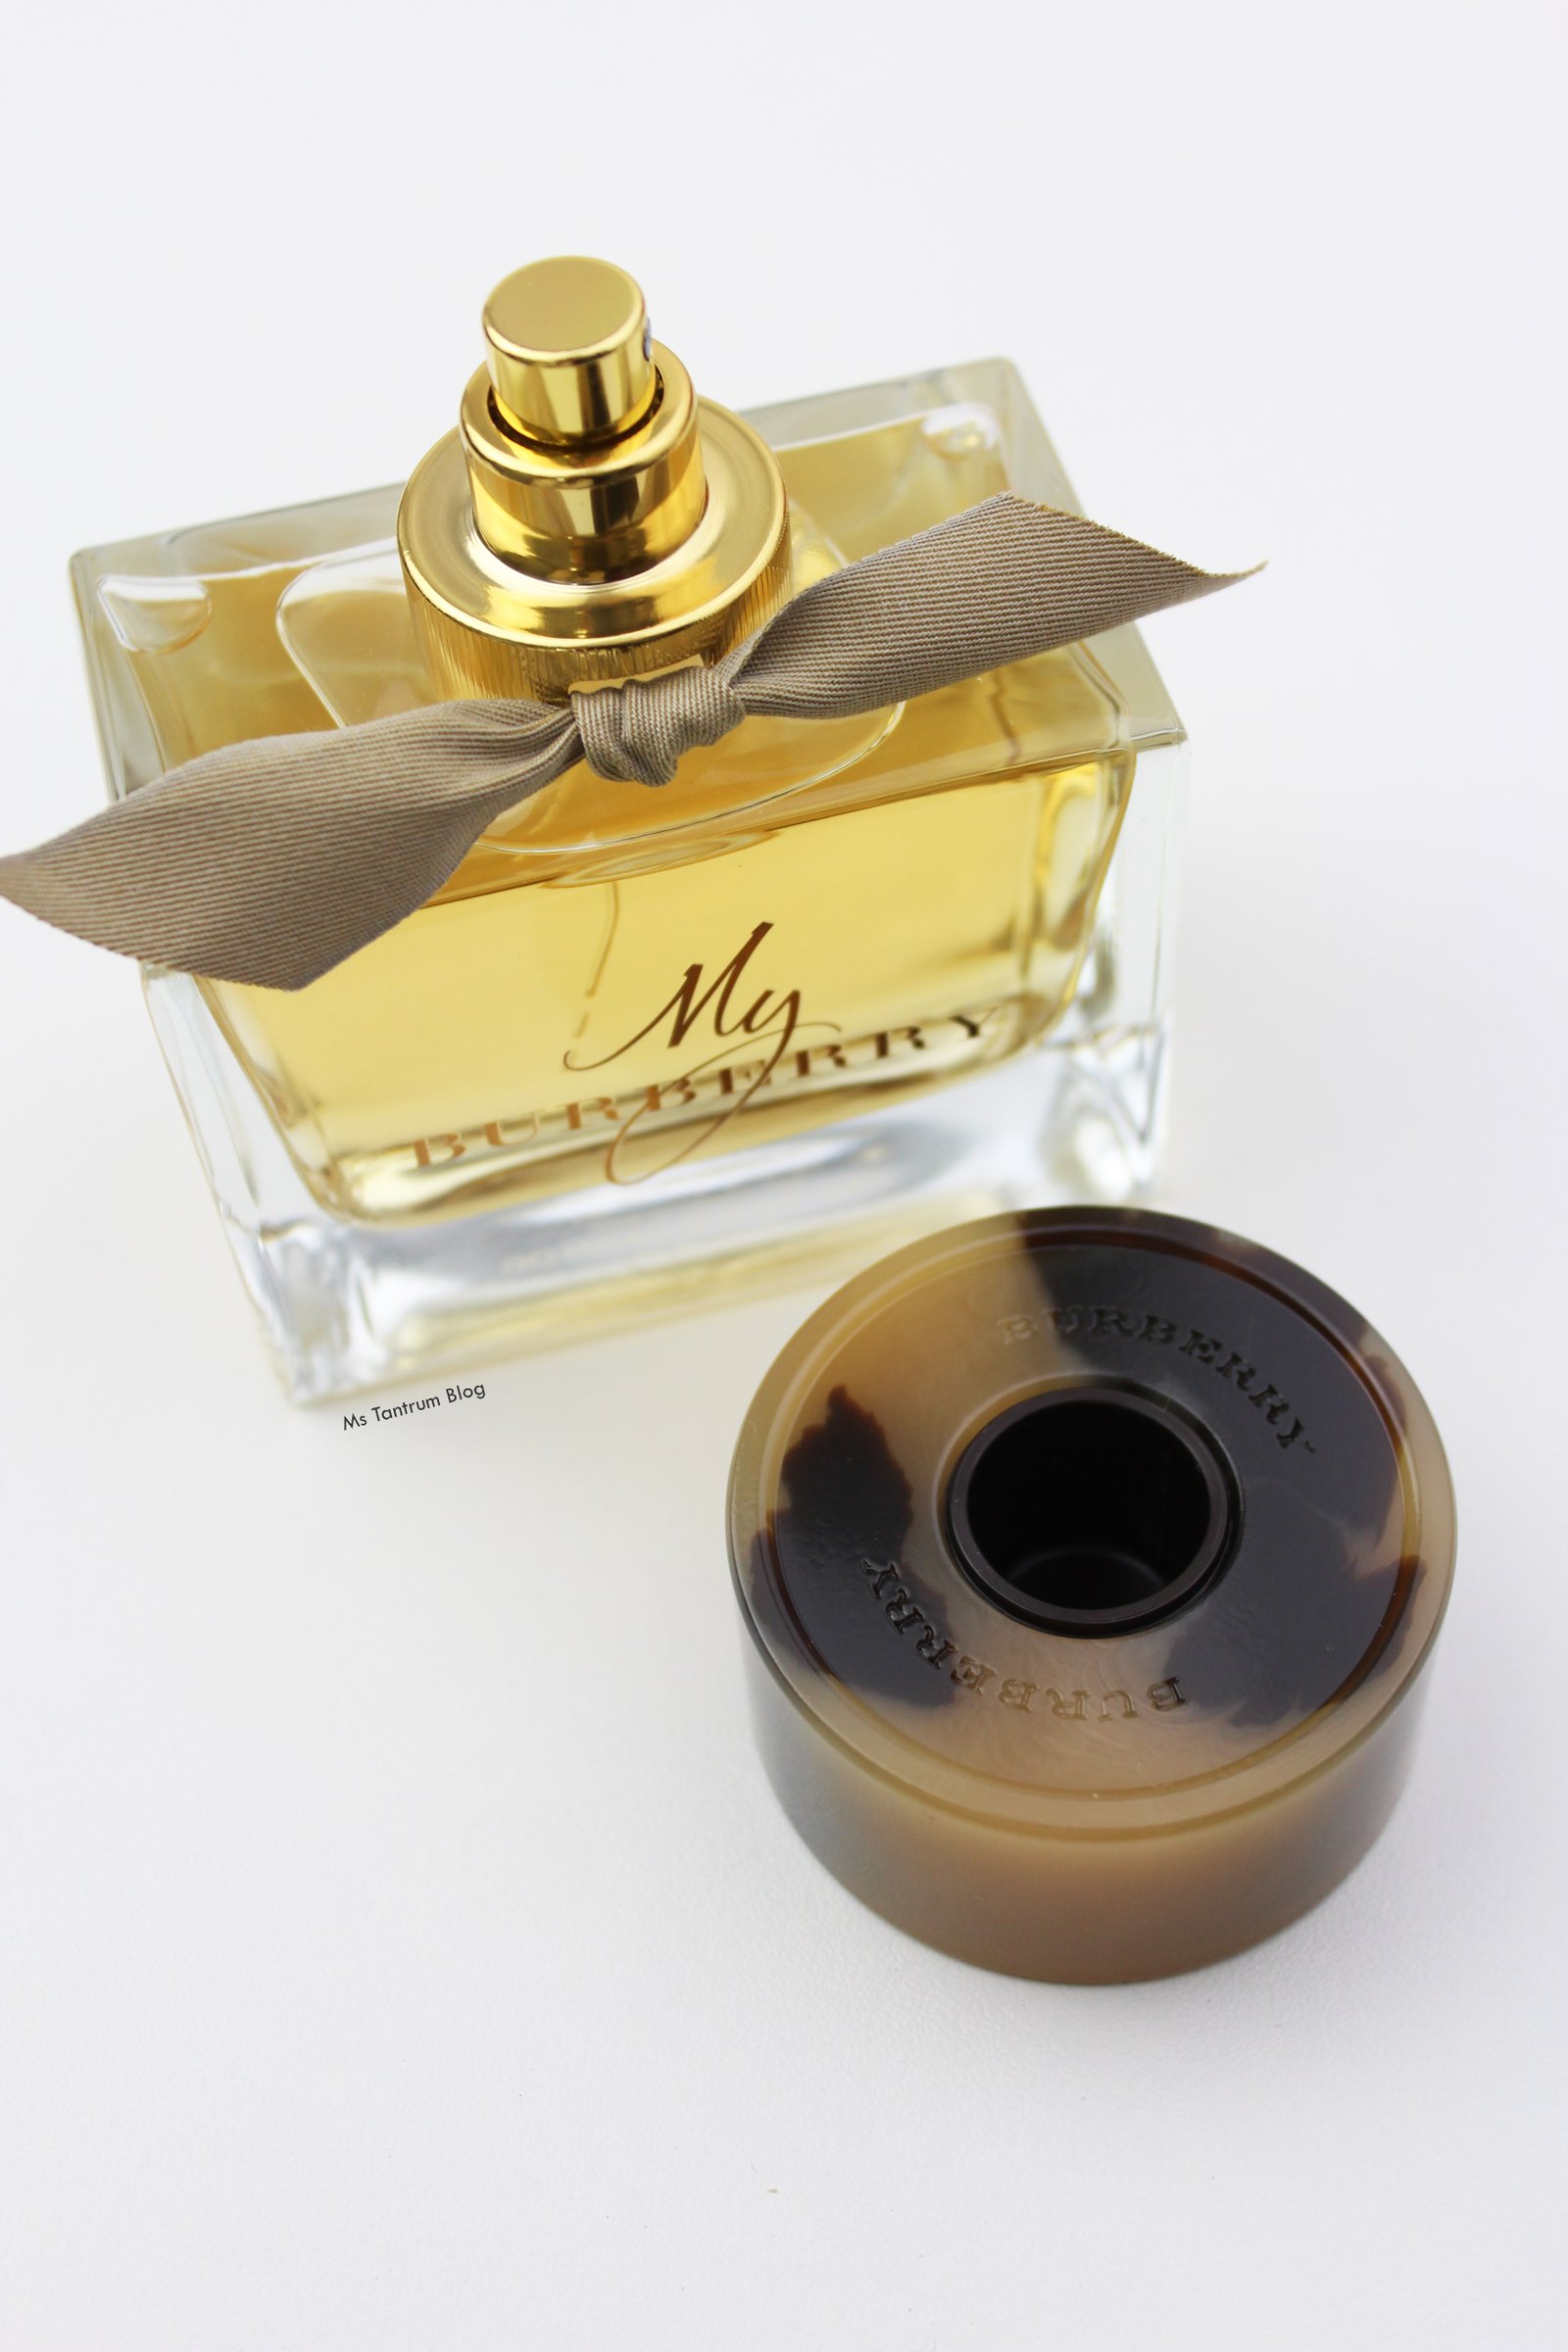 My Burberry Perfume bottle - Ms Tantrum Blog